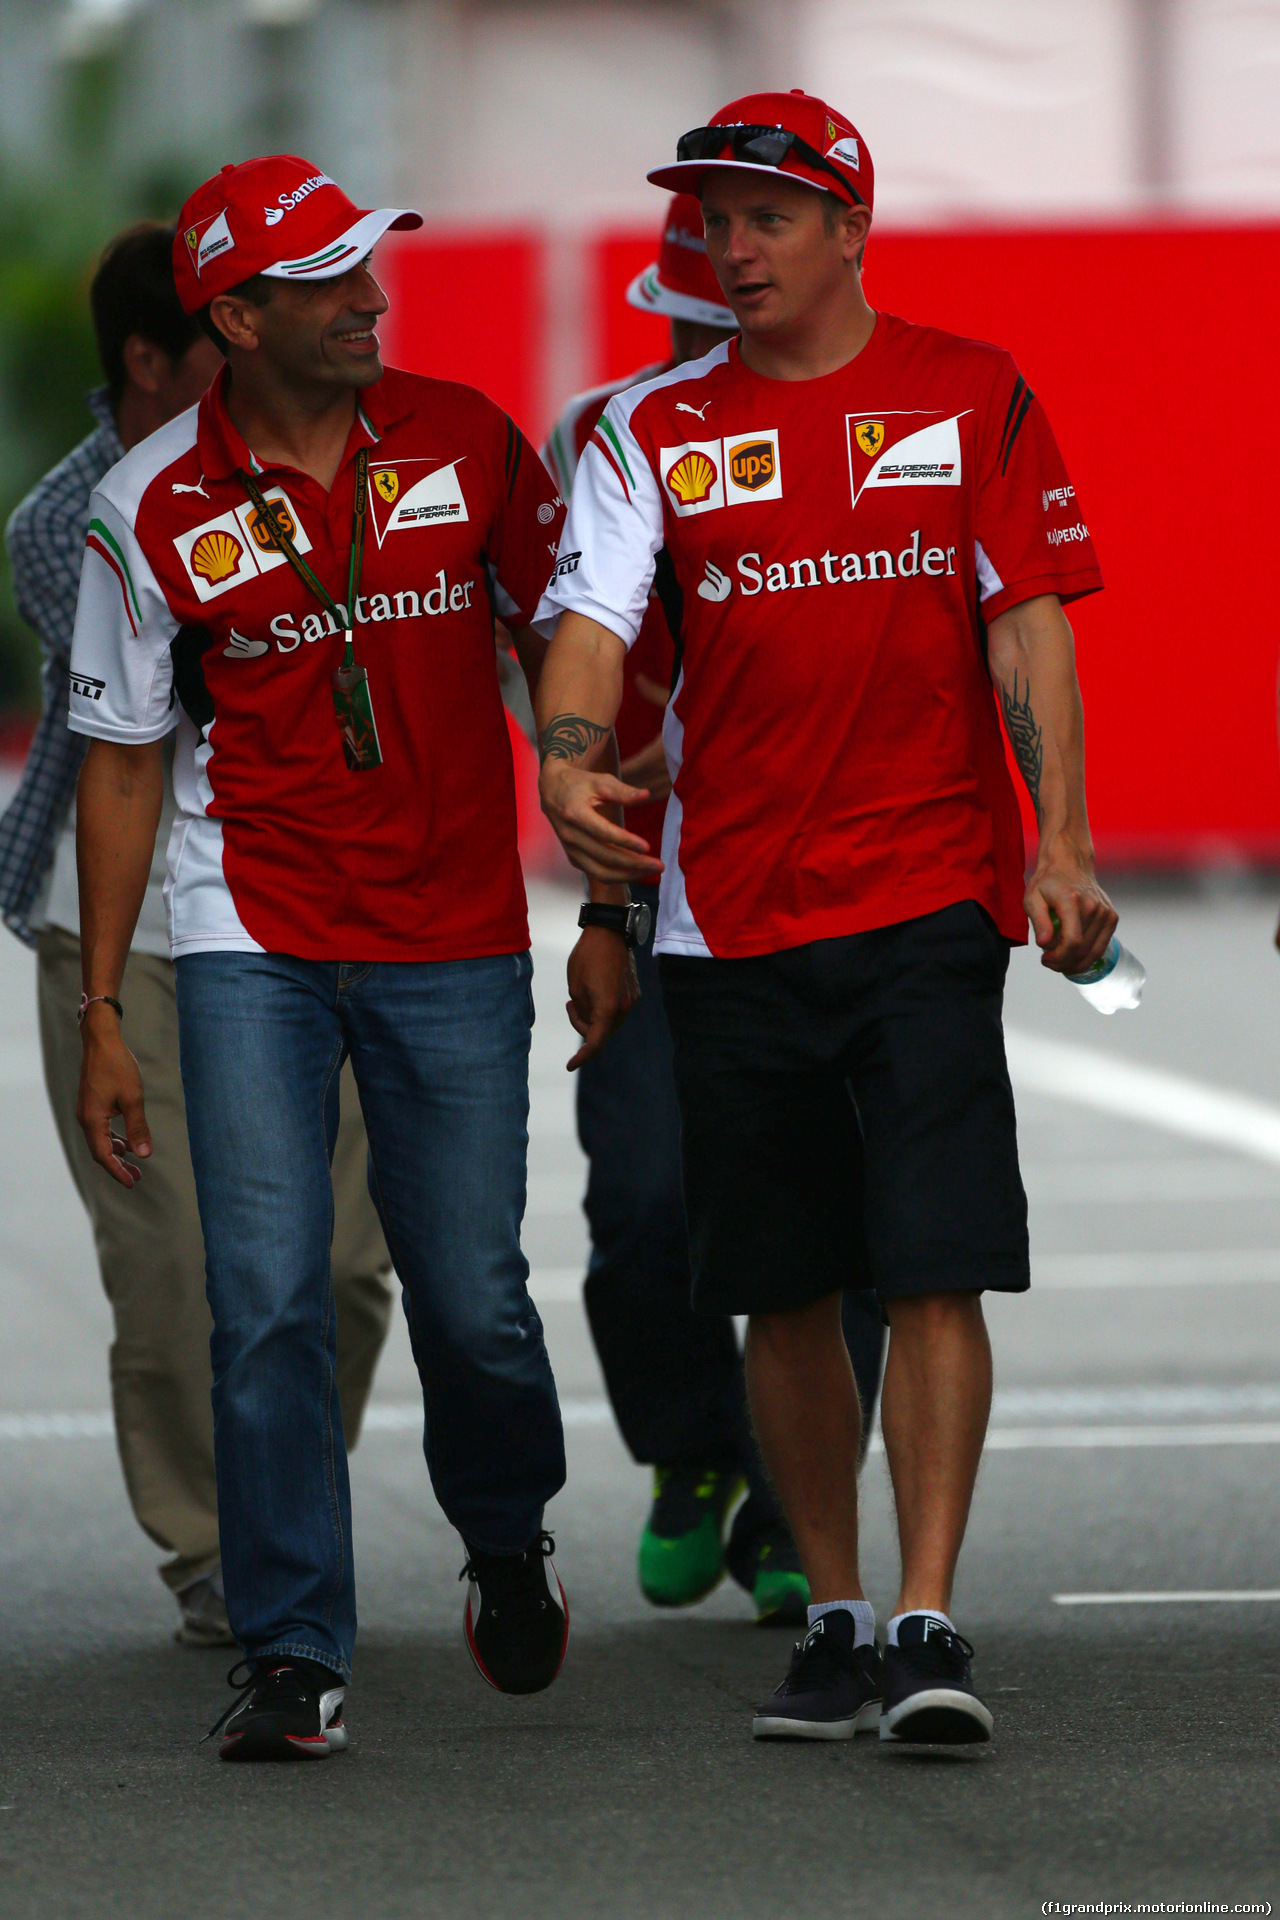 GP GIAPPONE, 03.10.2014 - Marc Gene (ESP), Test Driver Ferrari e Kimi Raikkonen (FIN) Ferrari F14-T